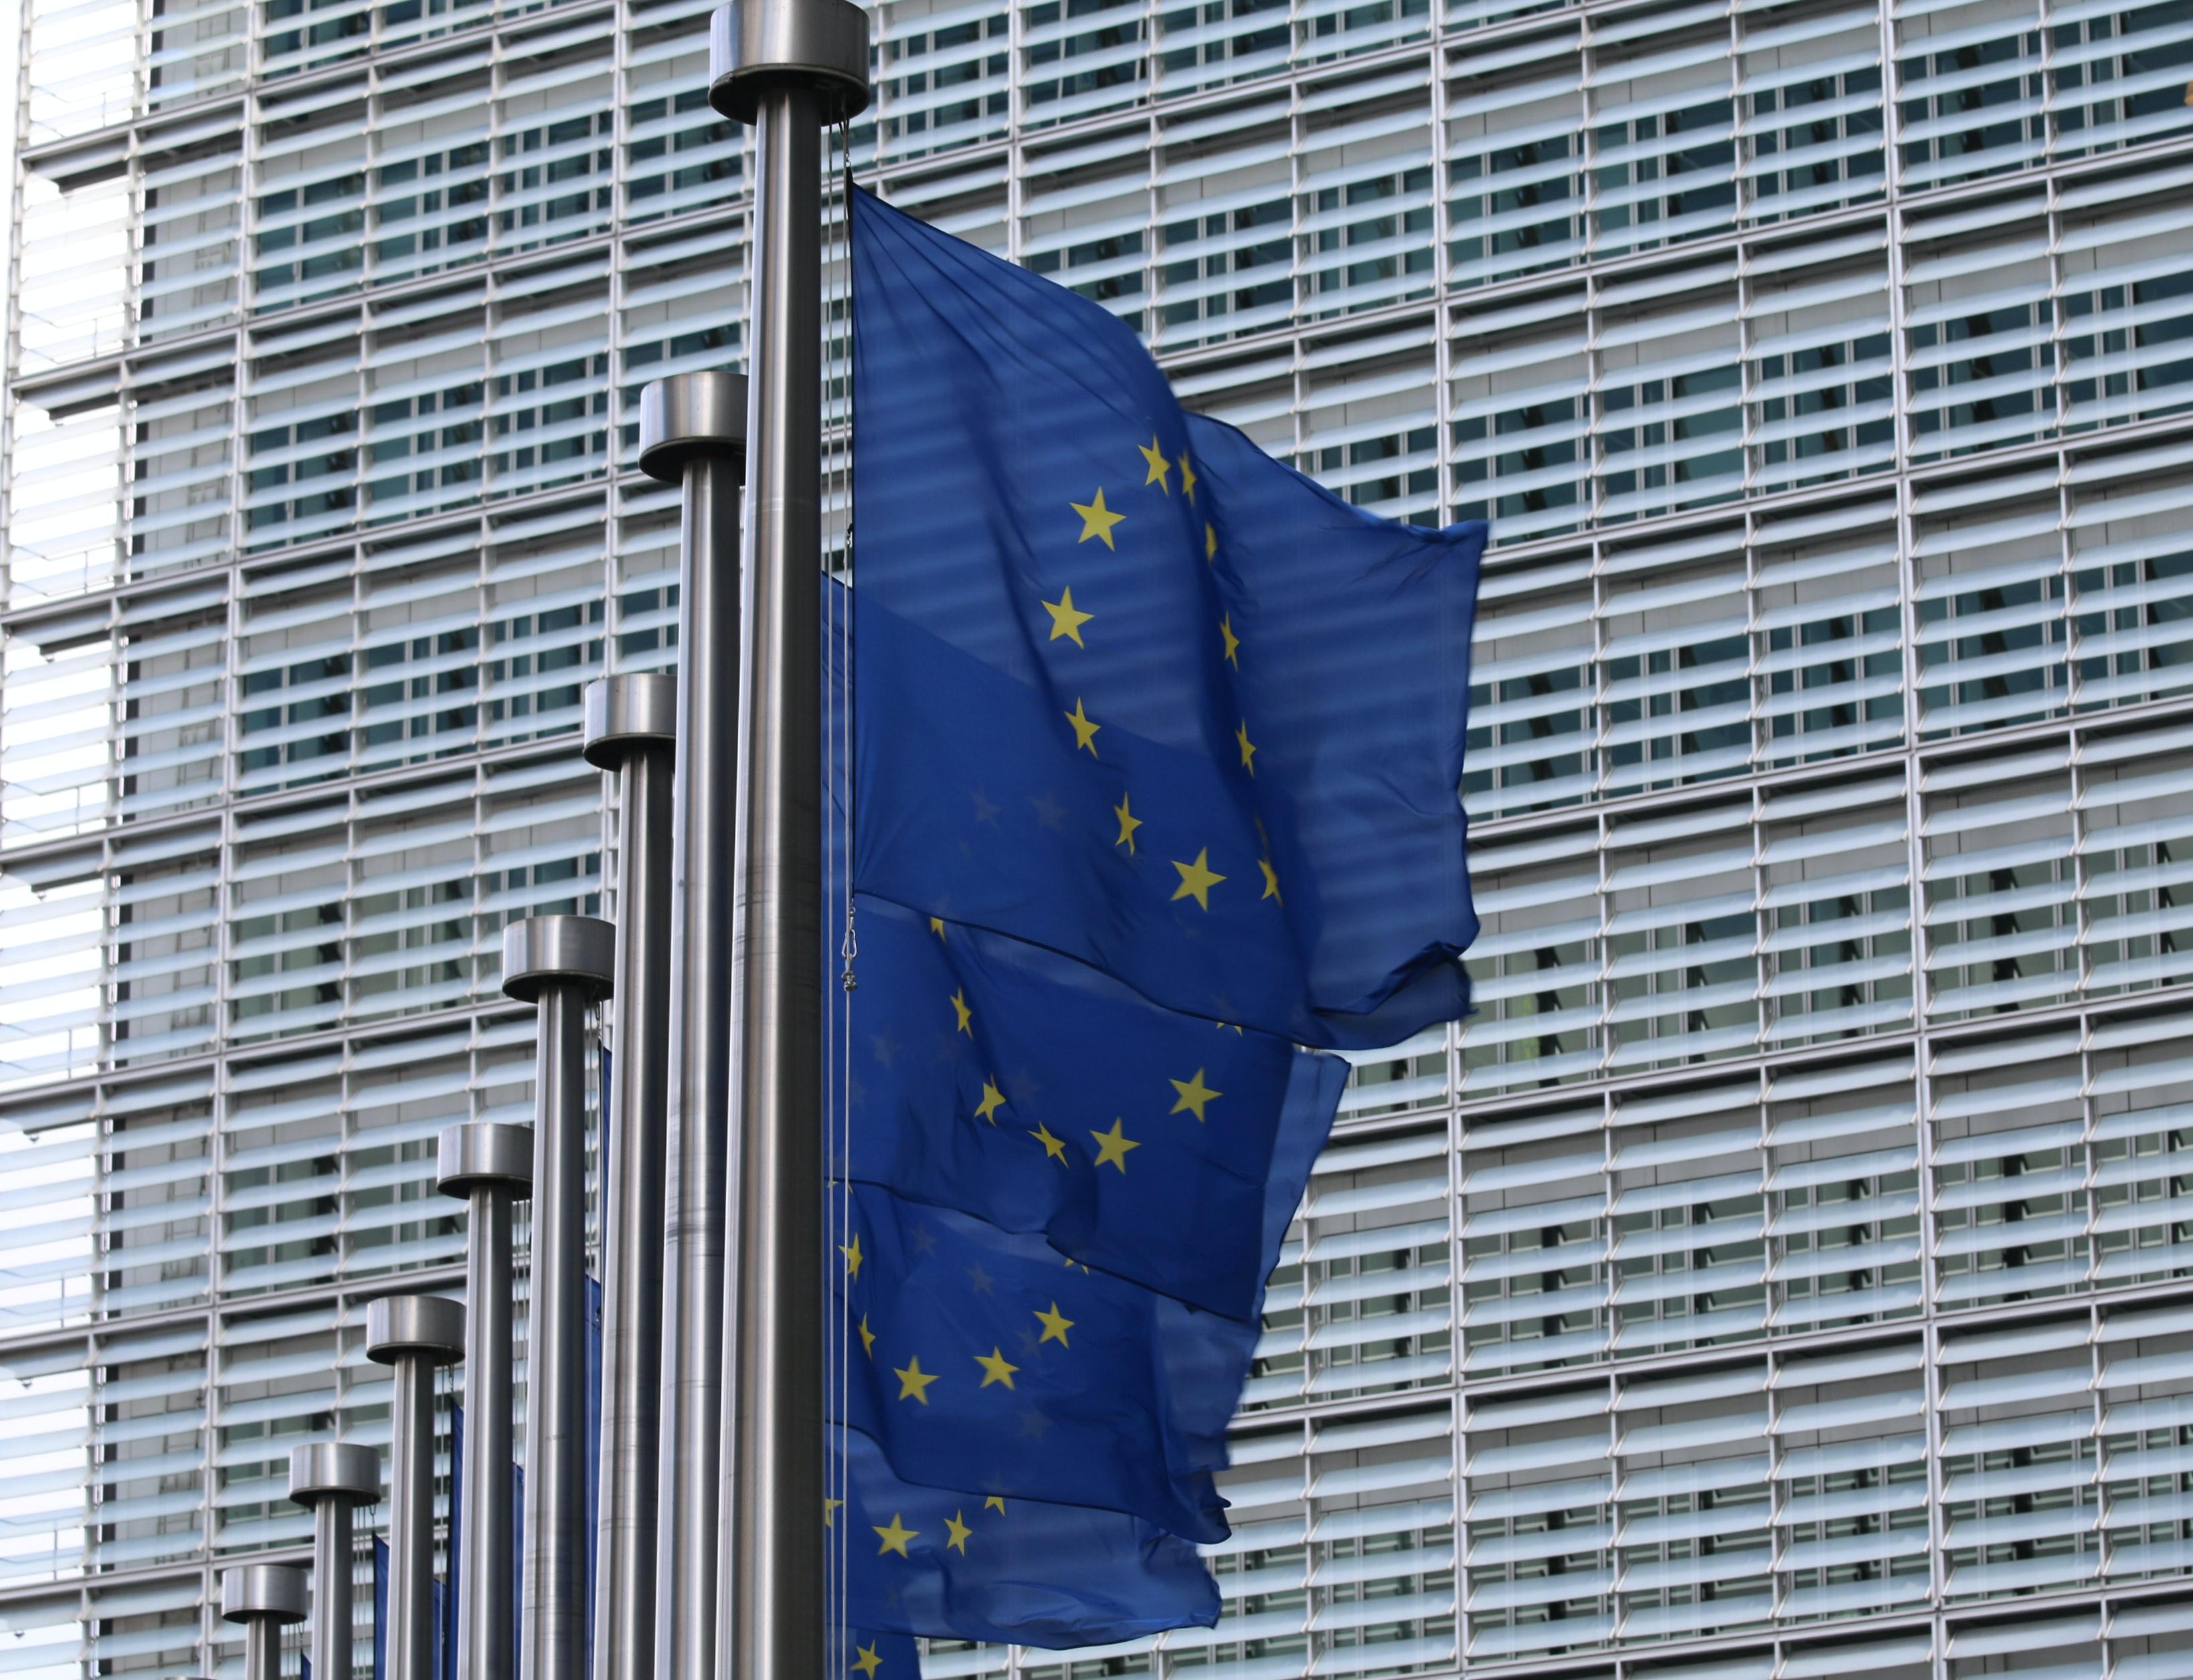 Image of the EU flags